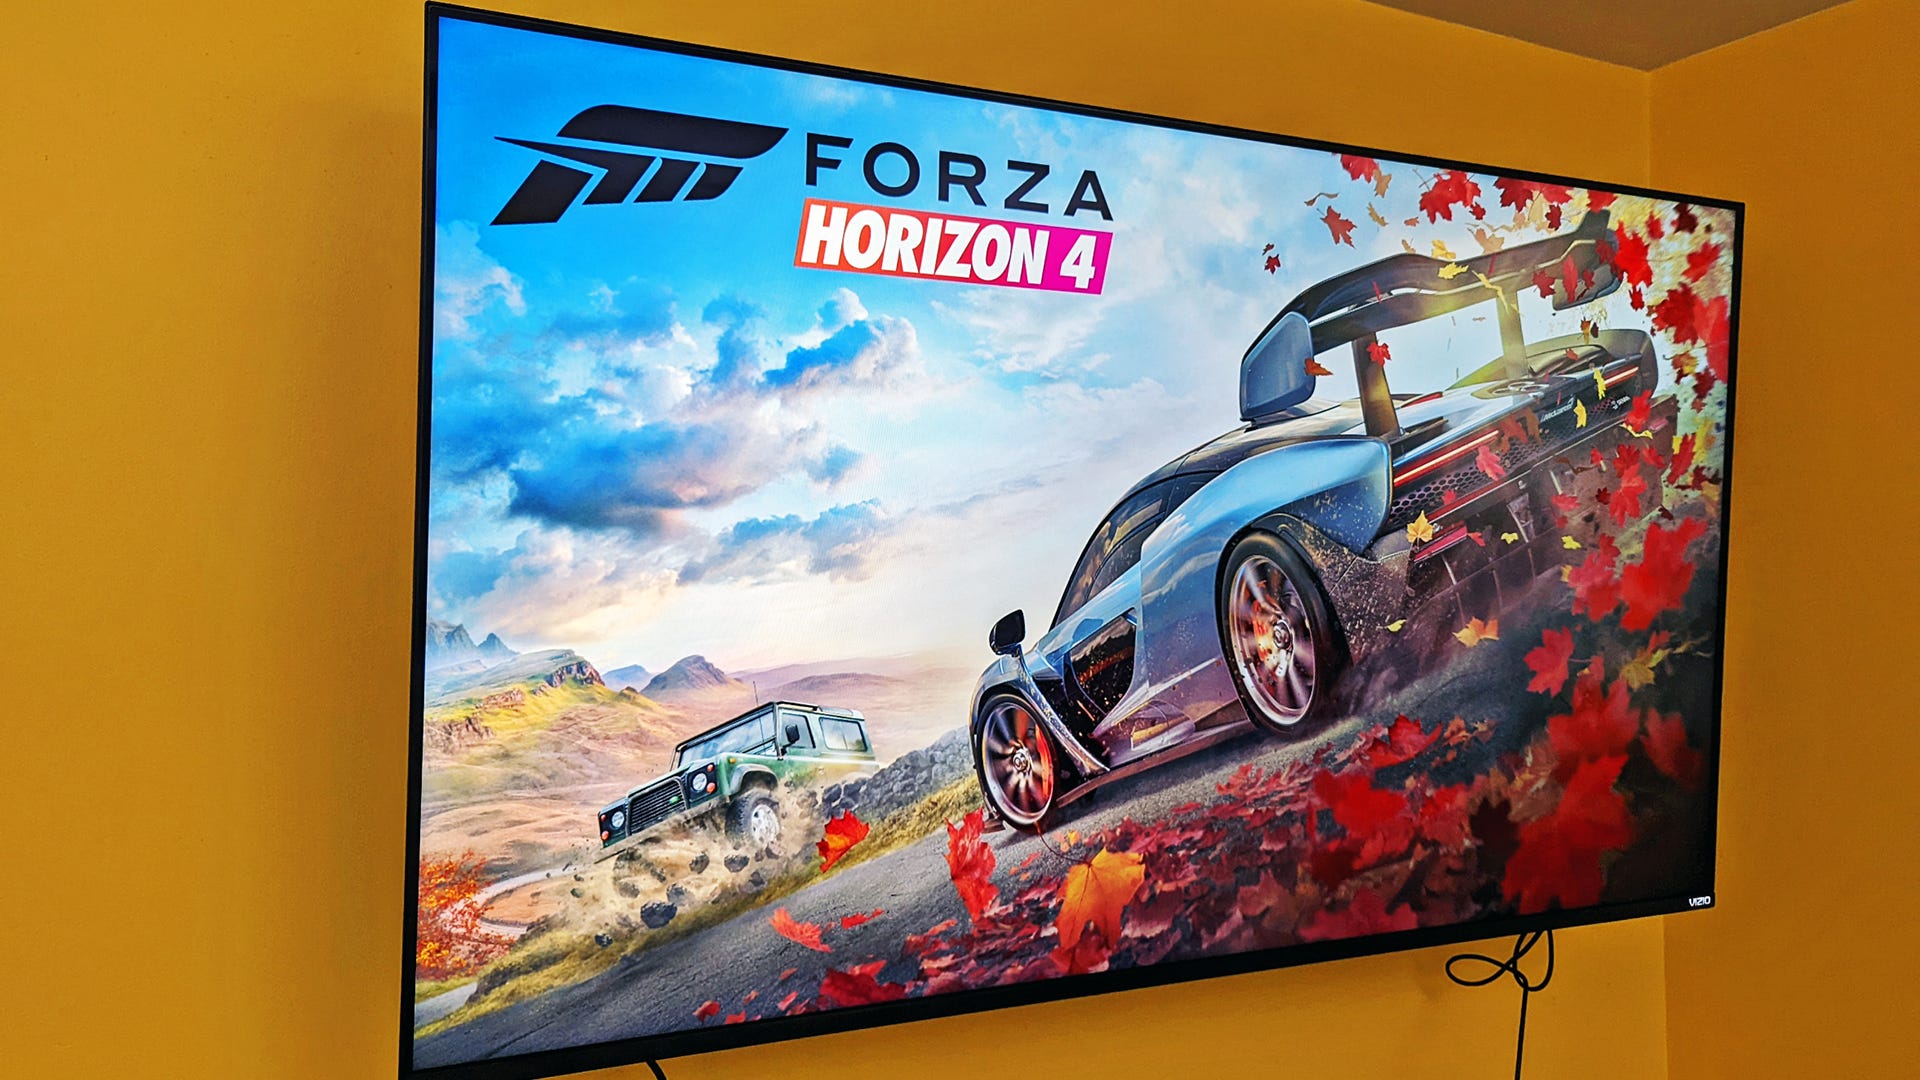 Vizio TV với Forza Horizon 4 trên.